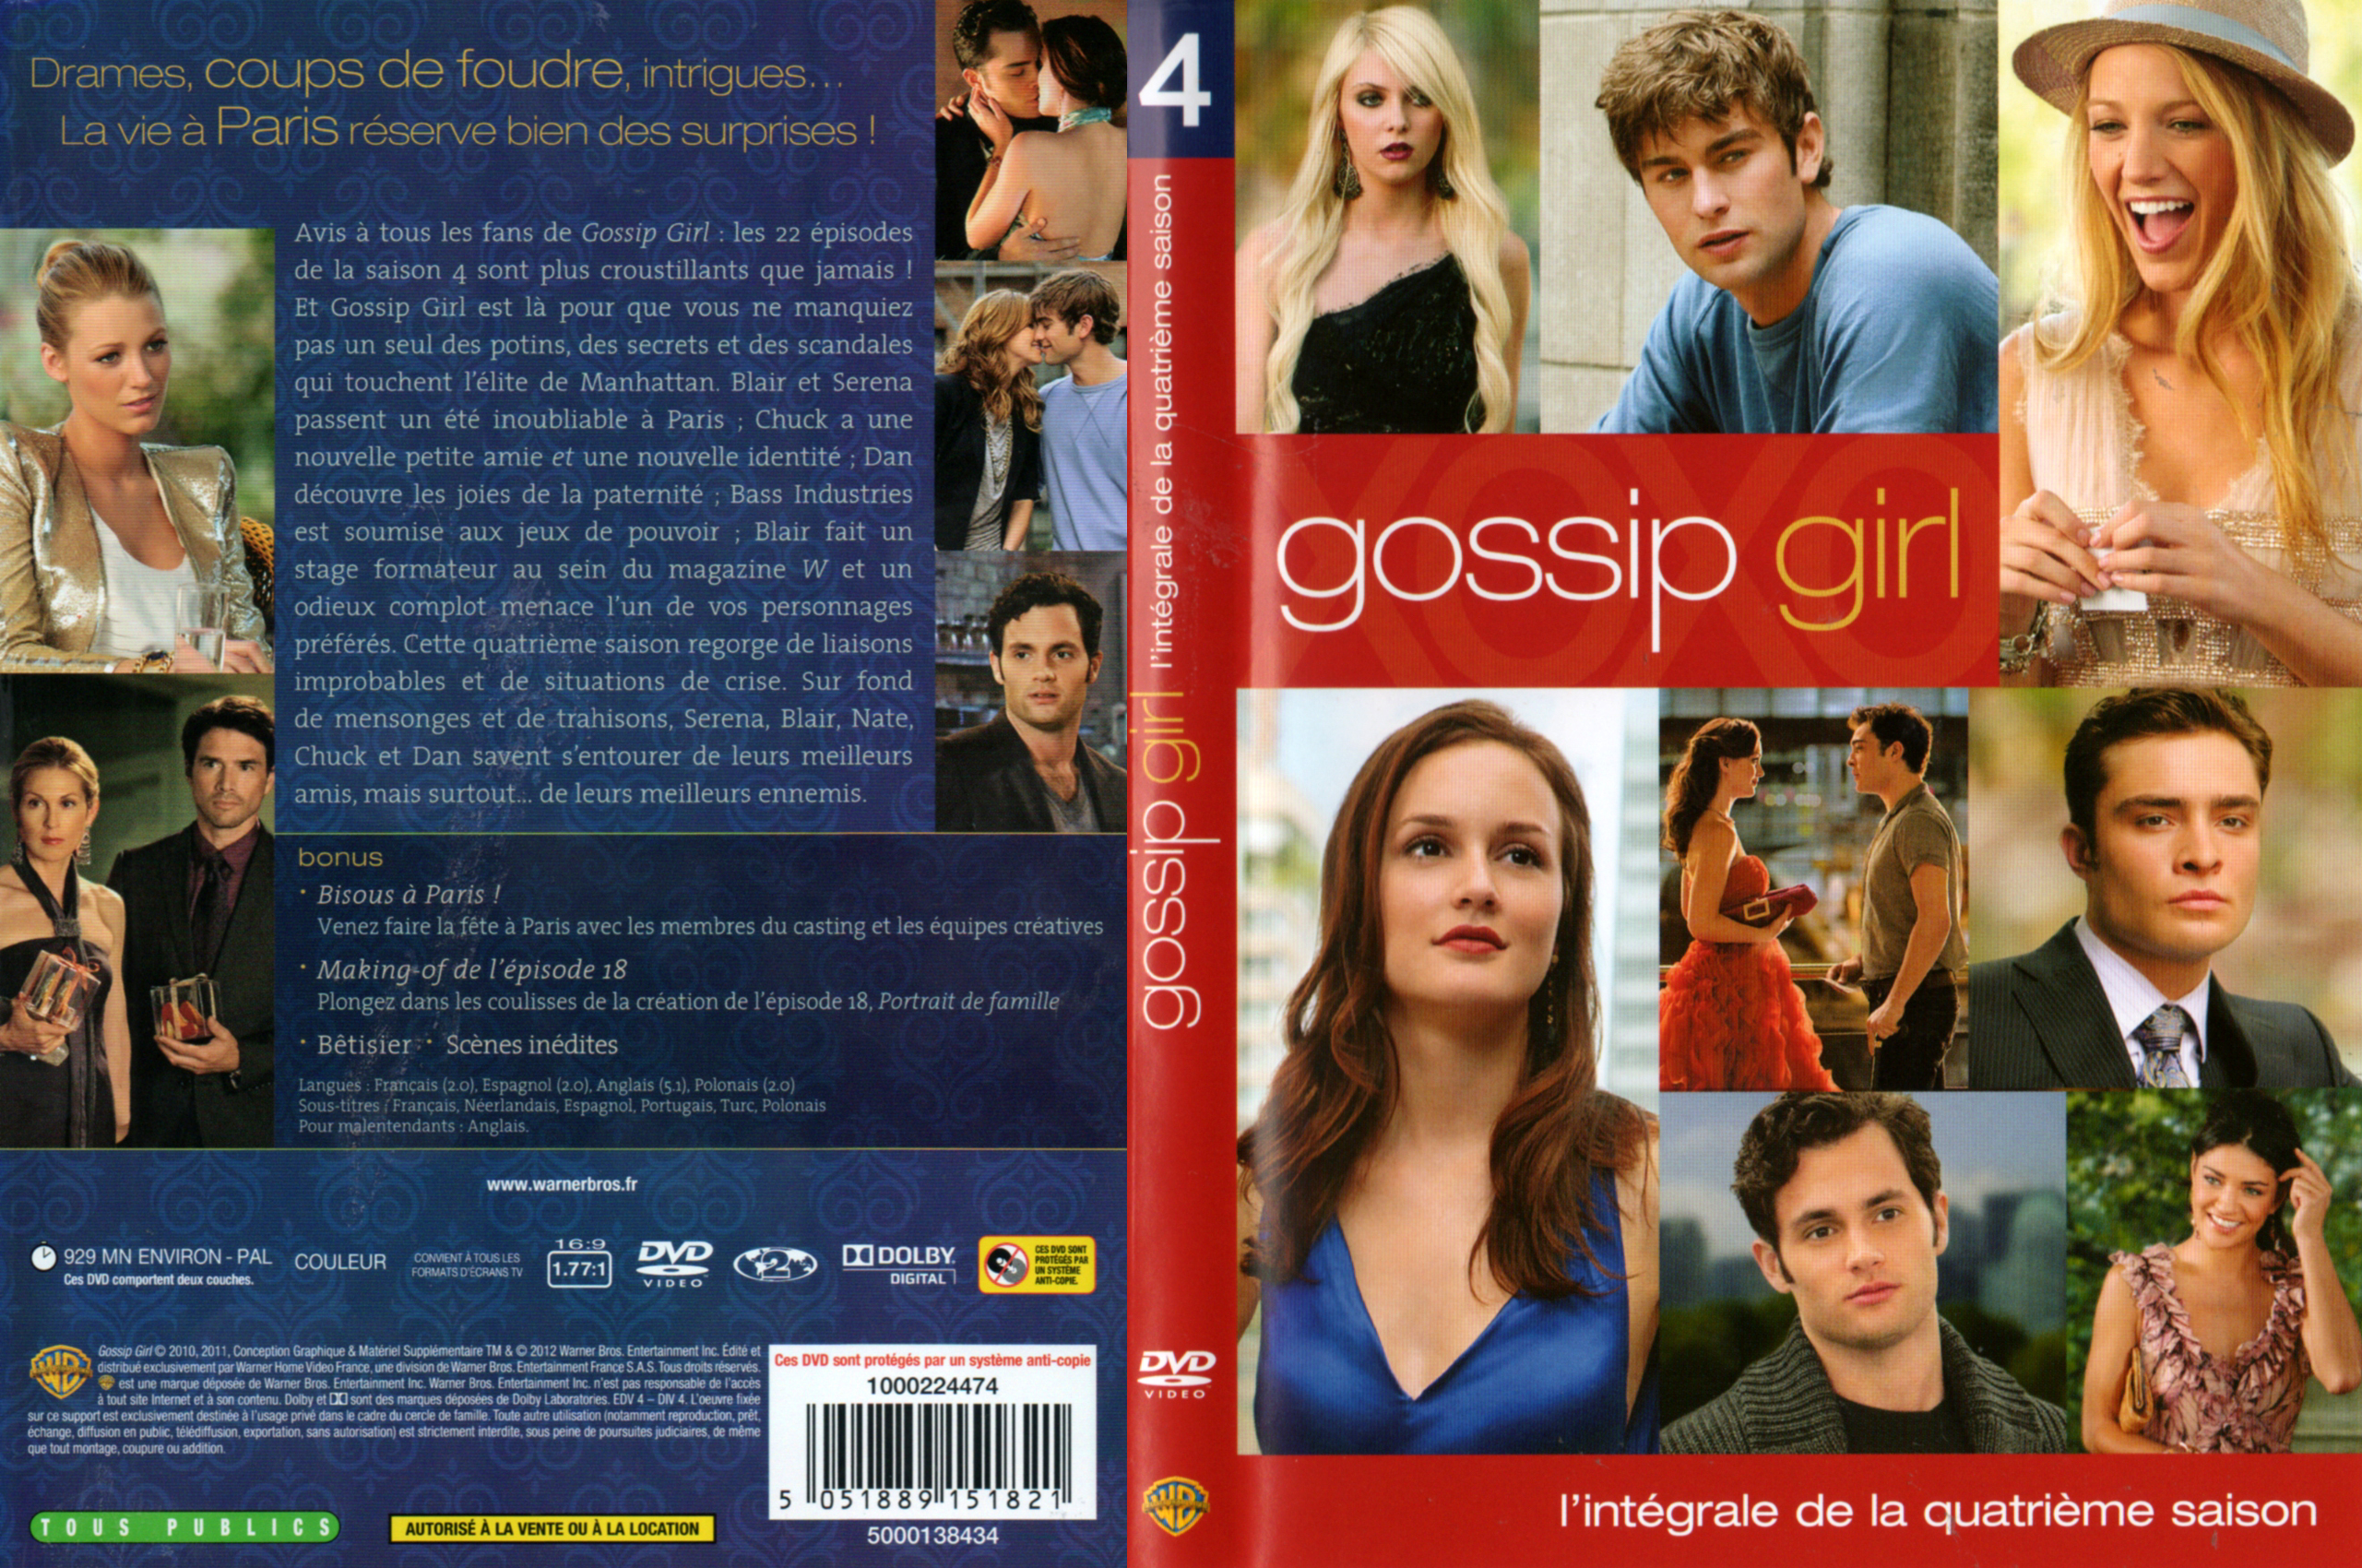 Jaquette DVD Gossip girl Saison 4 COFFRET